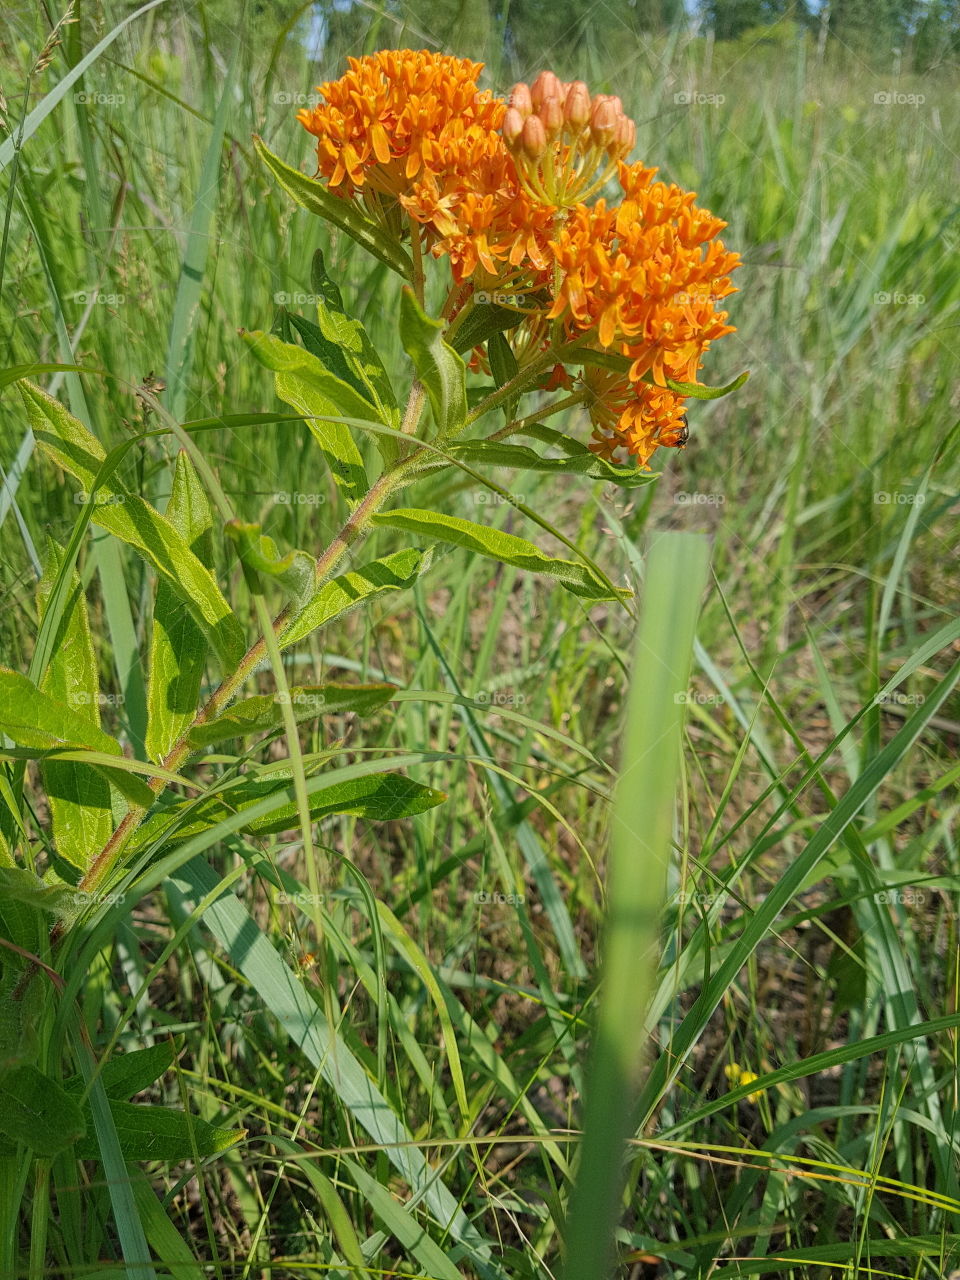 A single wild orange flower tilts over the grass.